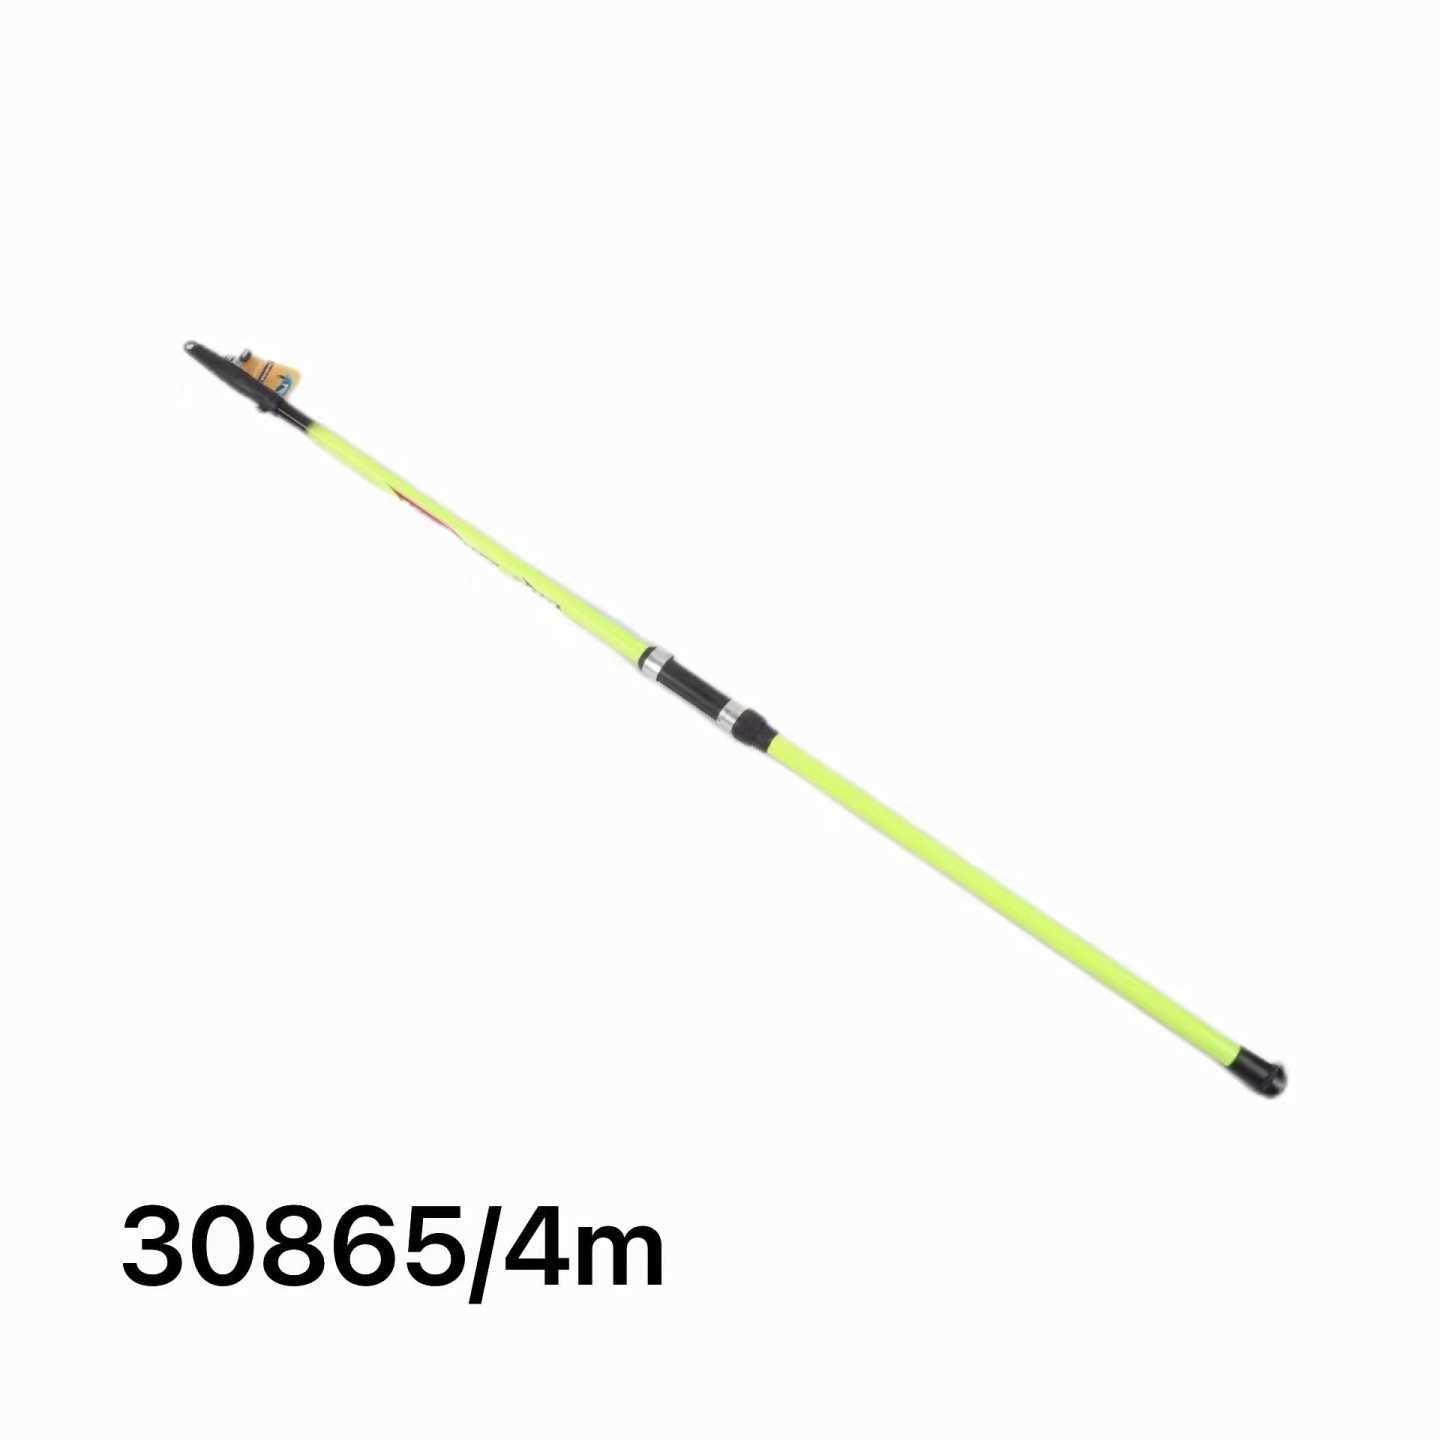 Telescopic fishing rod - 4m - 30865